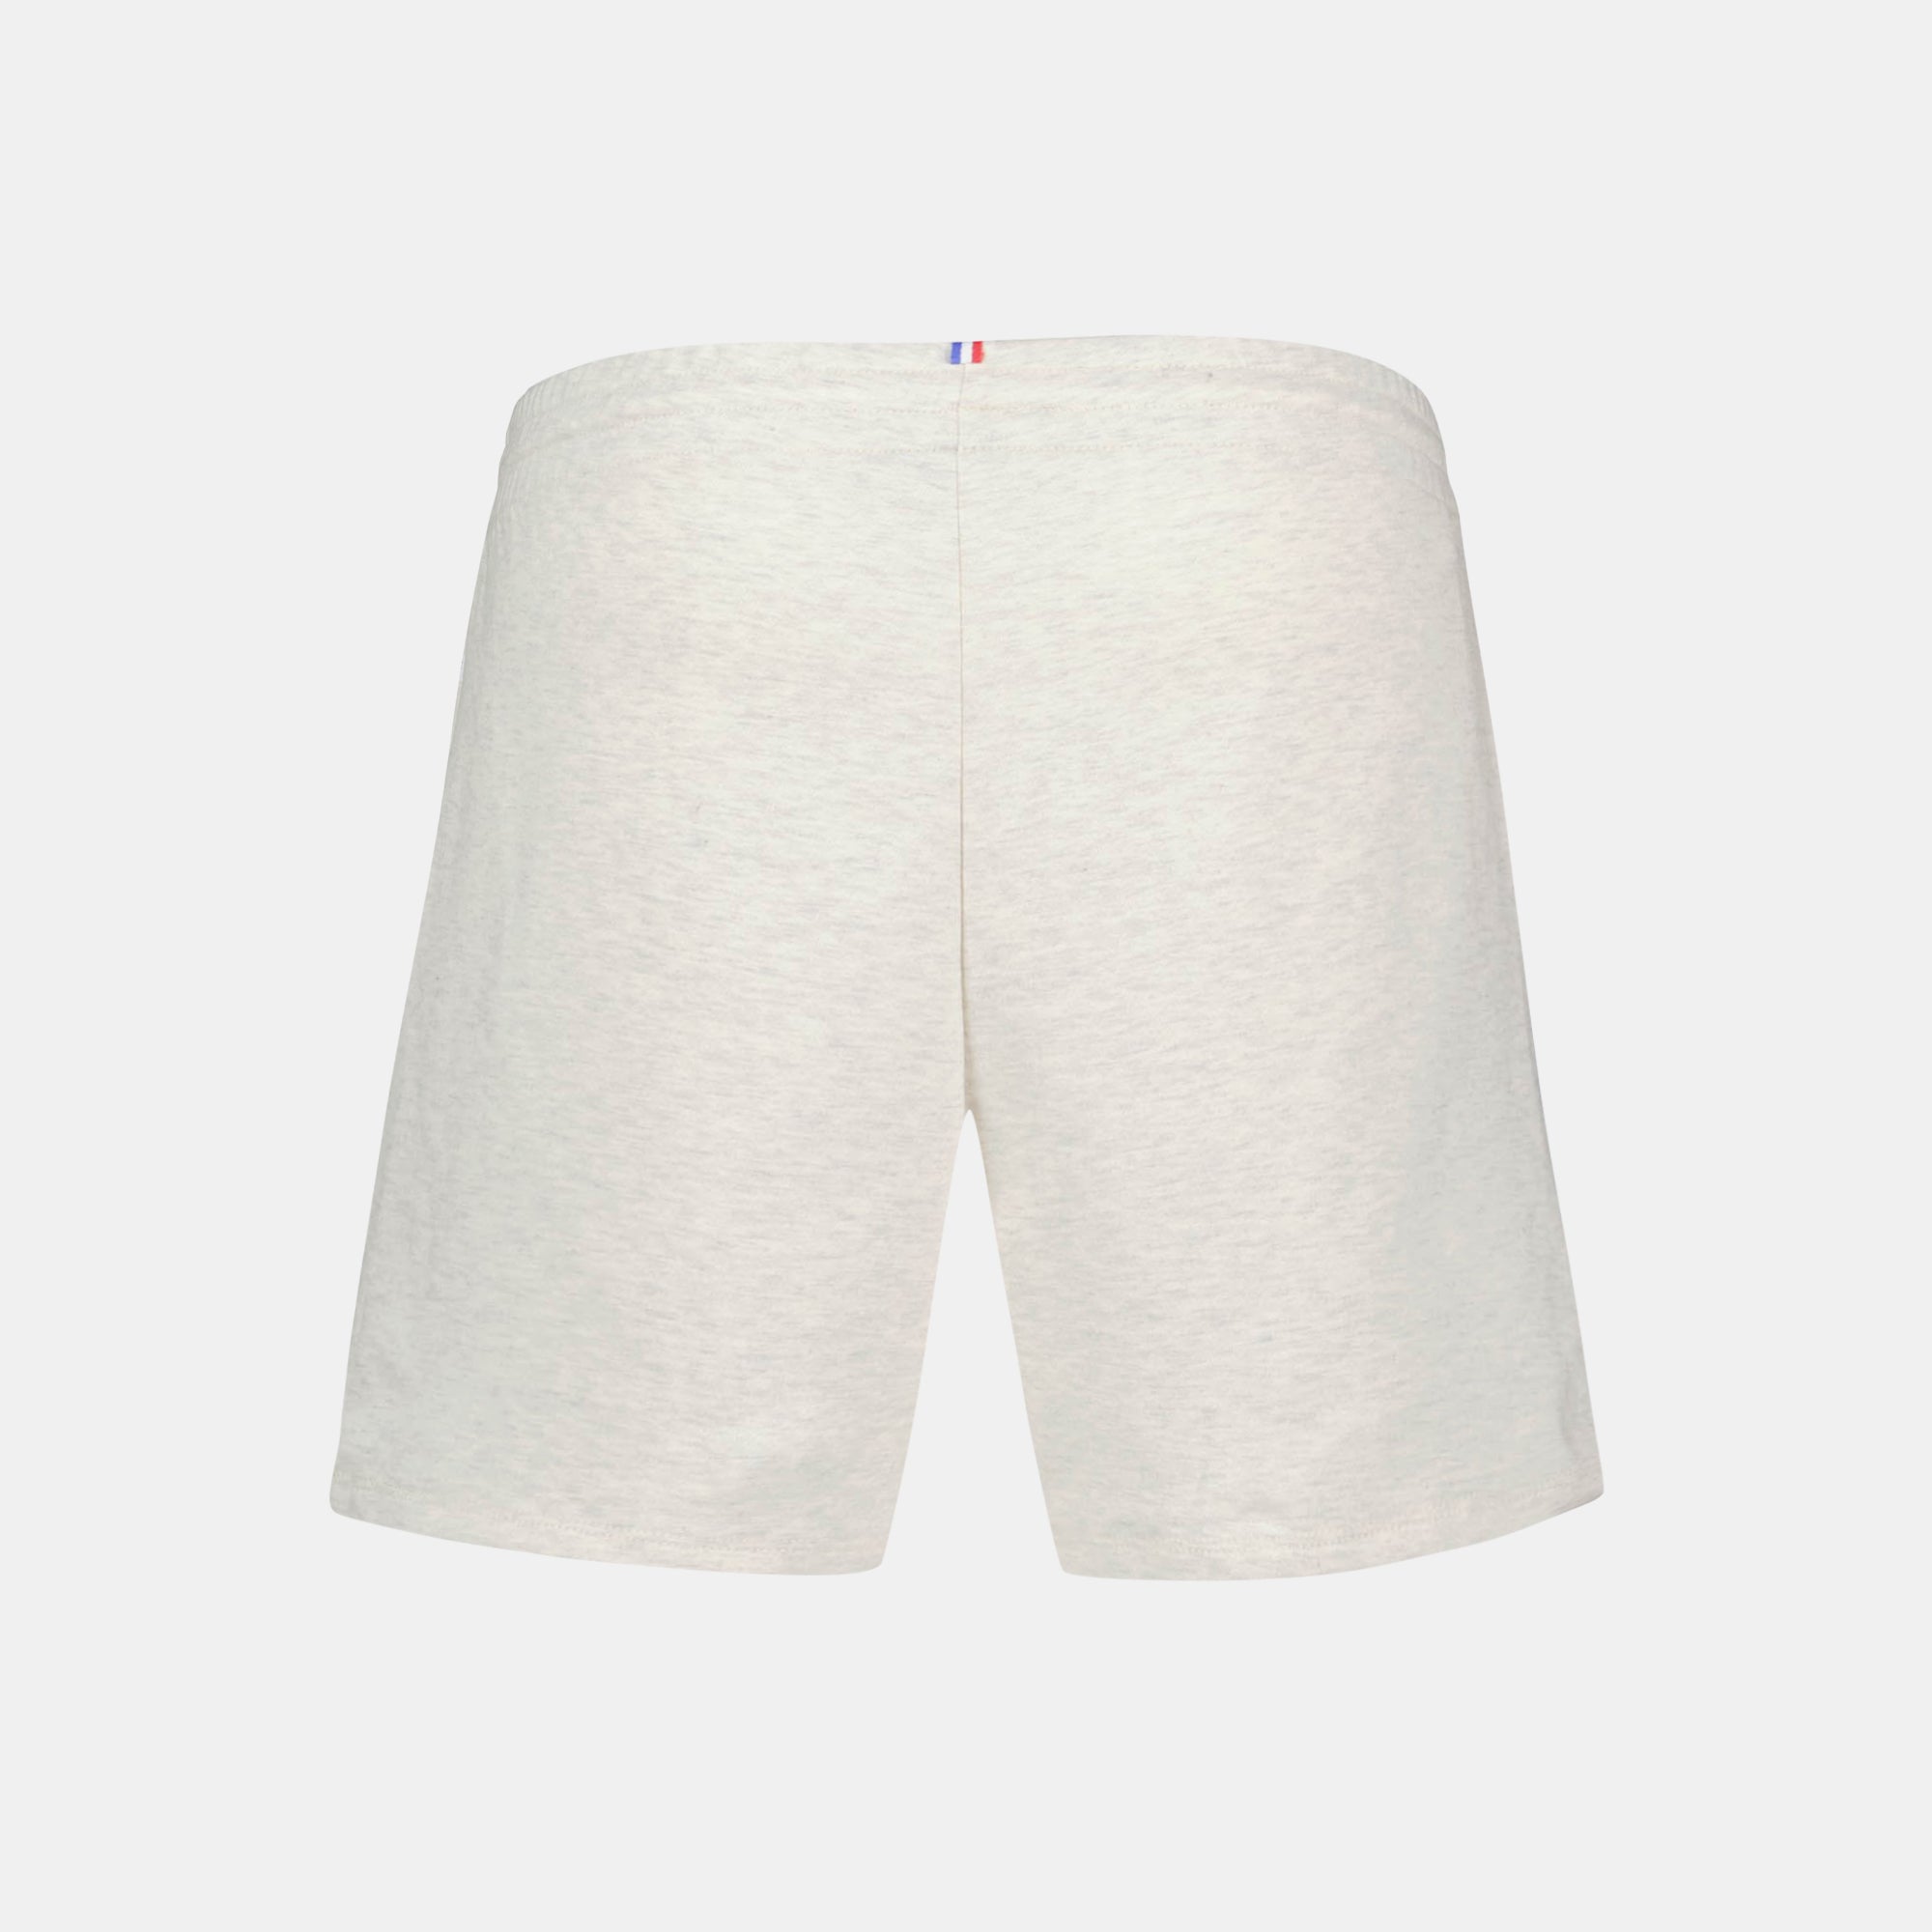 2410241-SAISON Short N°1 W beige chiné clair  | Shorts for women